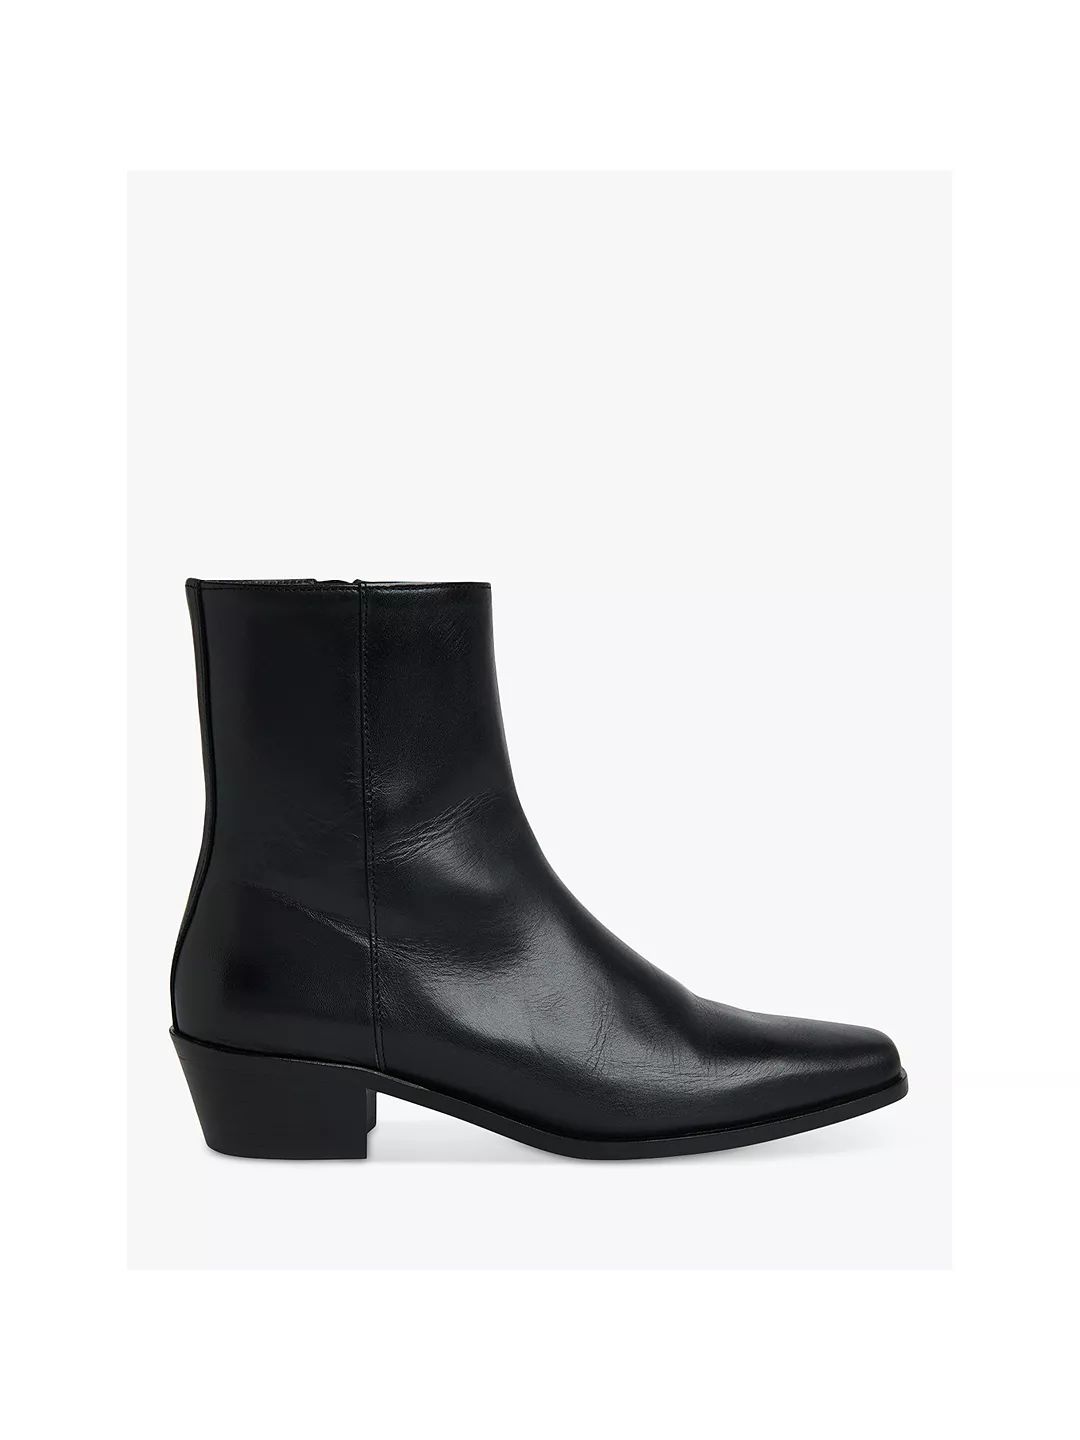 Whistles Kara Leather Ankle Boots, Black | John Lewis (UK)